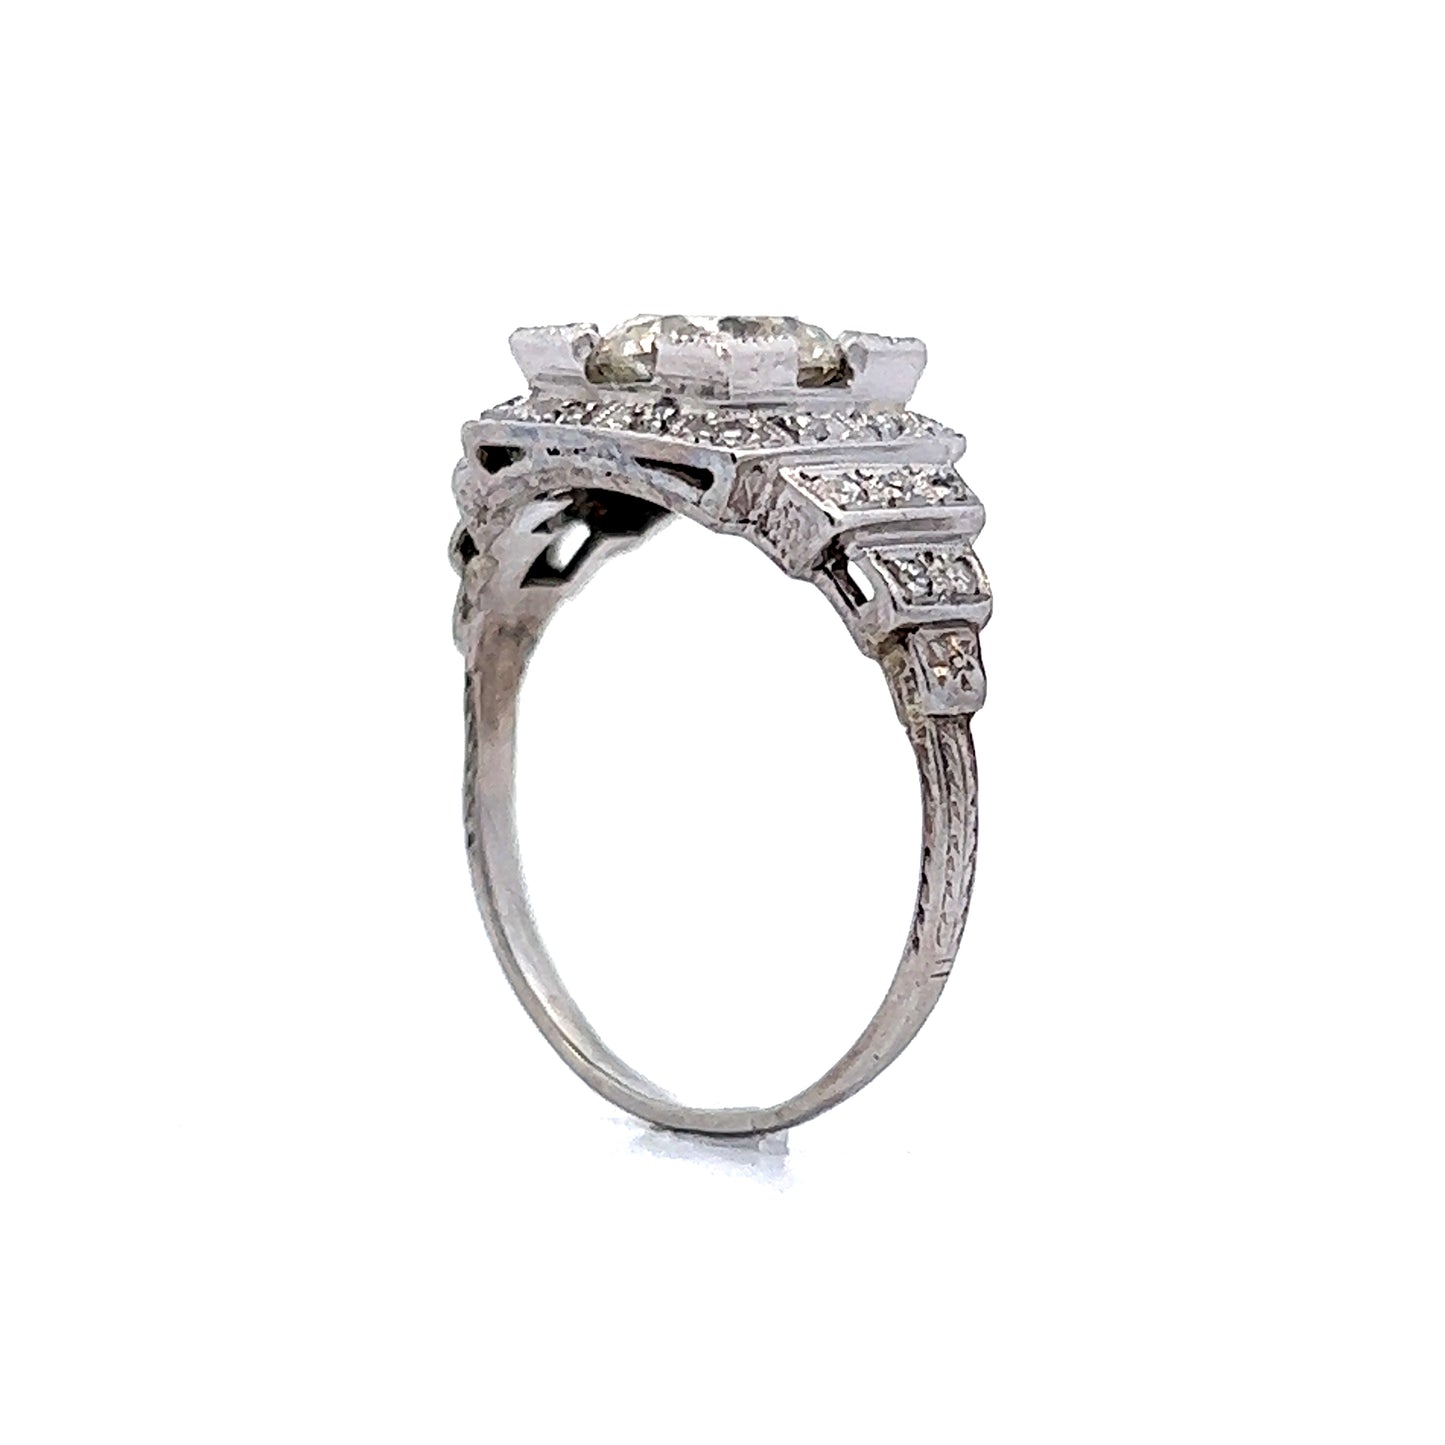 1.51 Vintage Art Deco Engagement Ring in Platinum